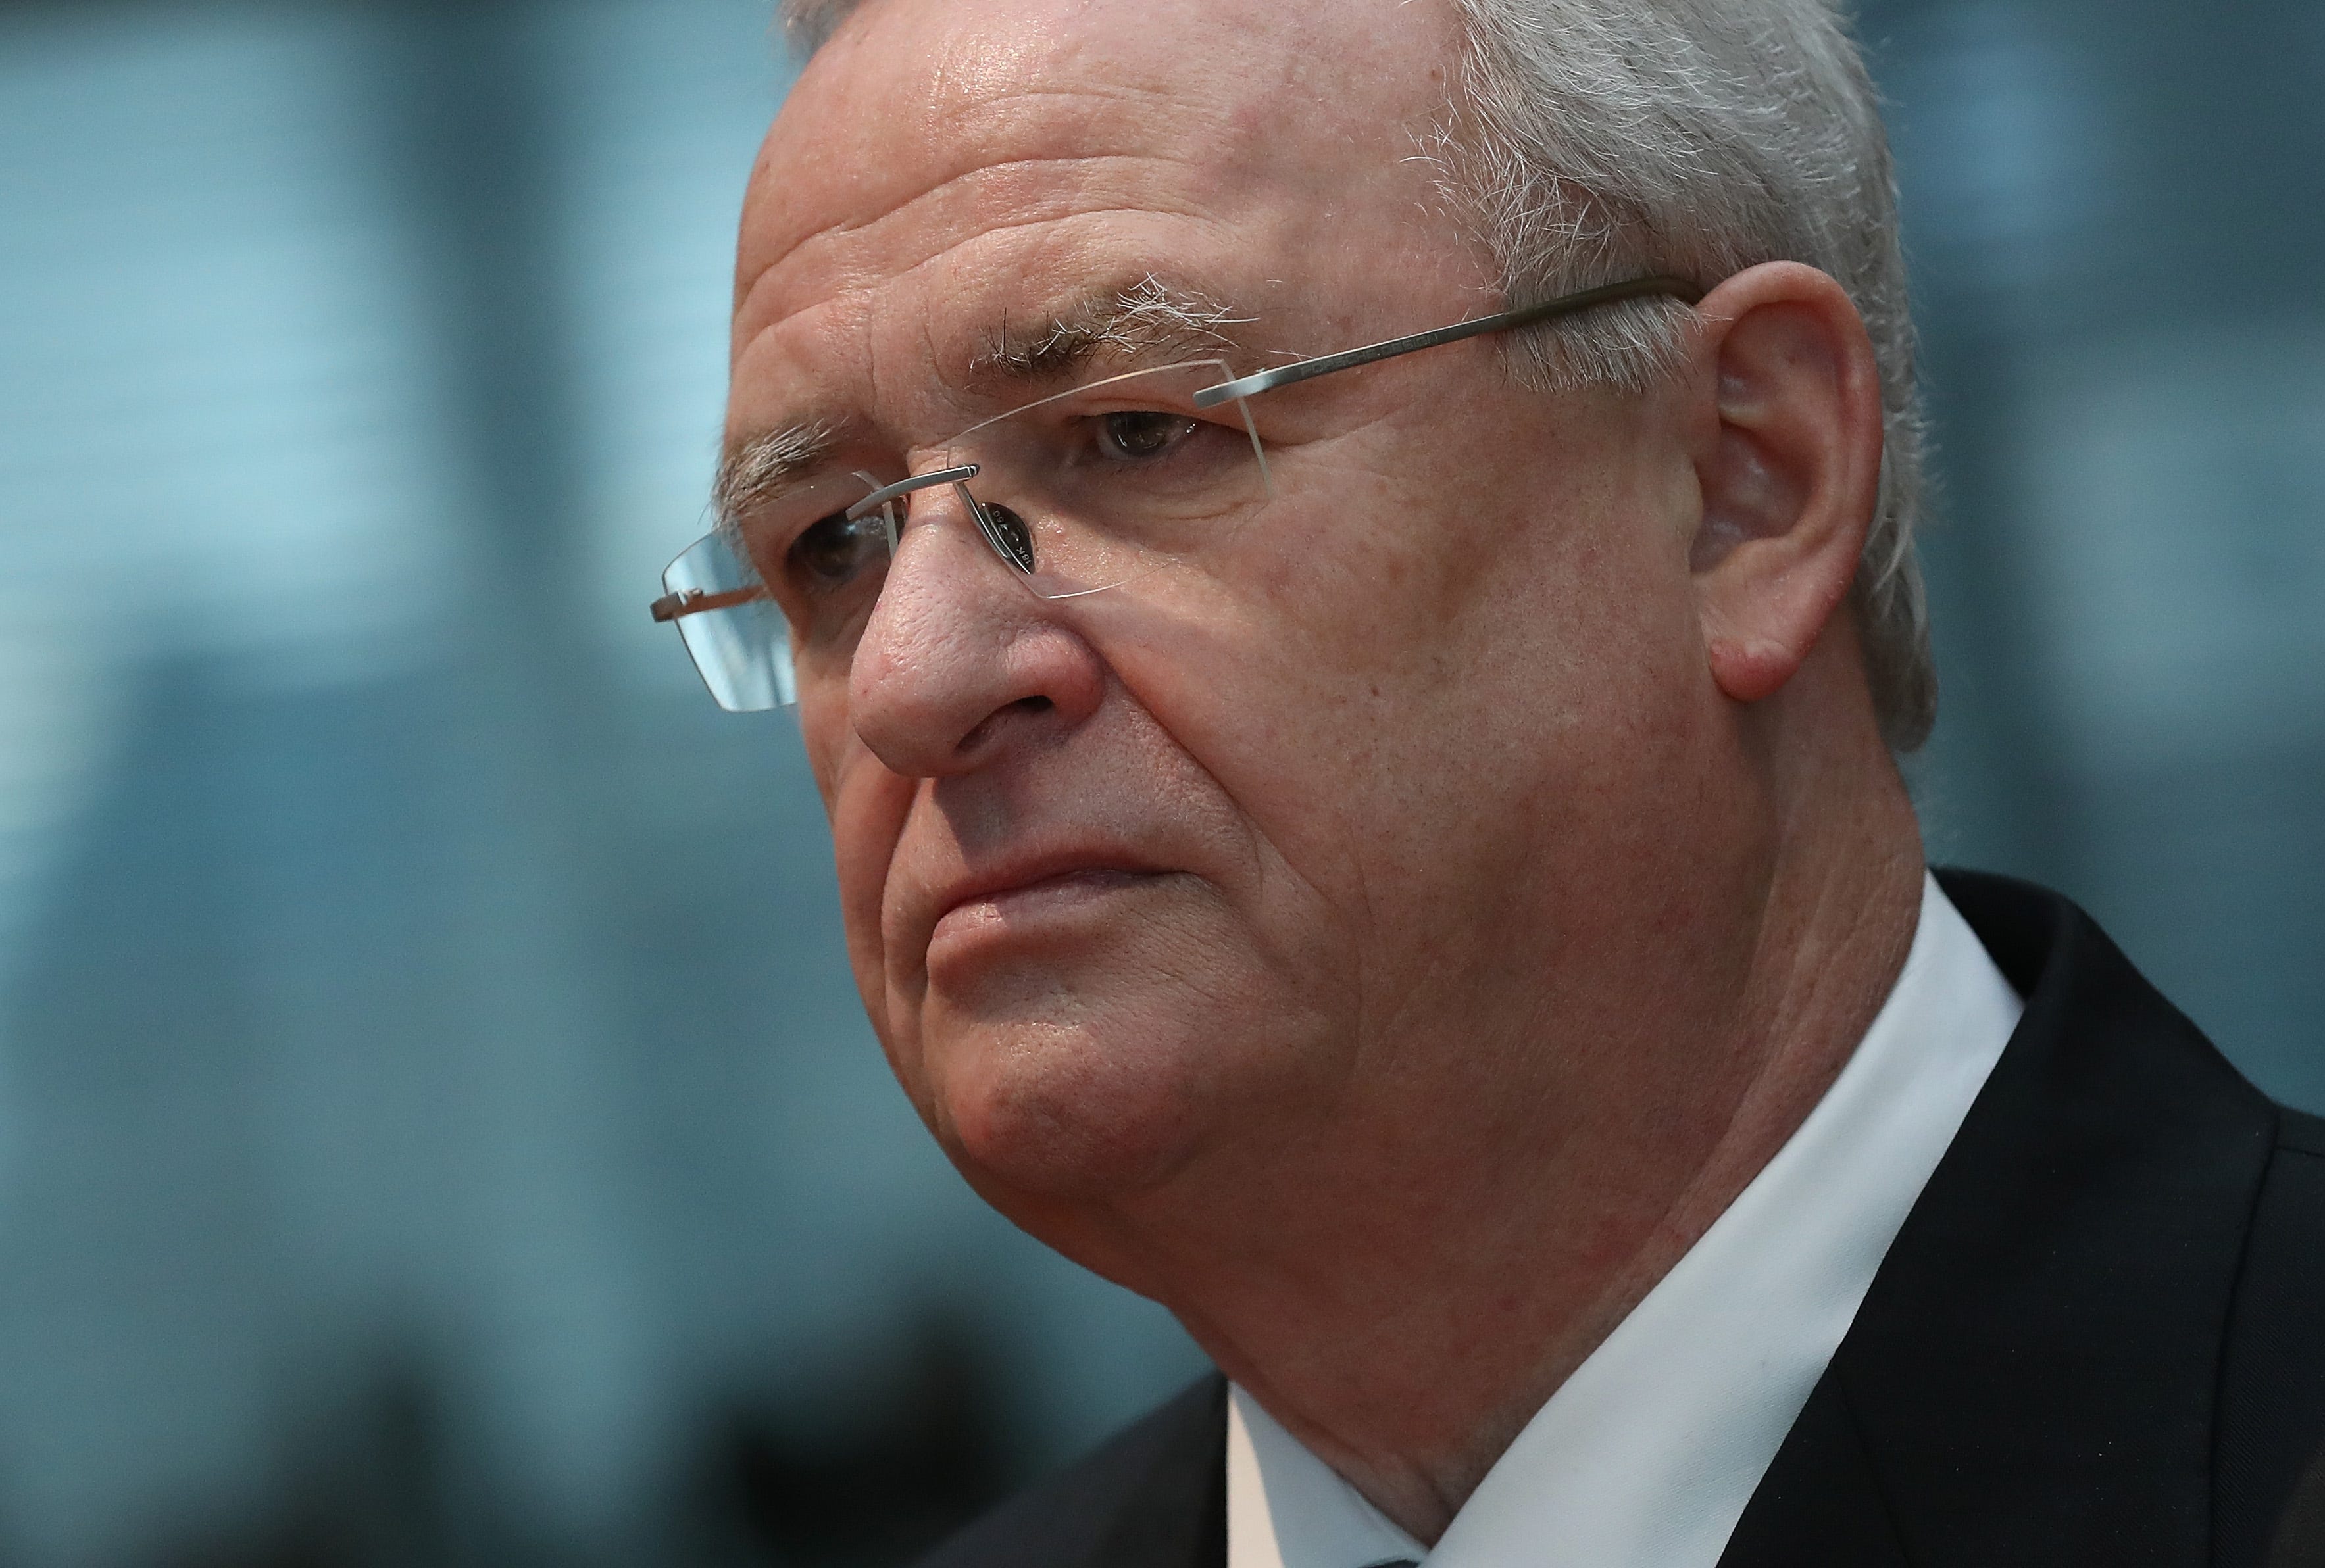 Martin Winterkorn, former CEO of German automaker Volkswagen AG